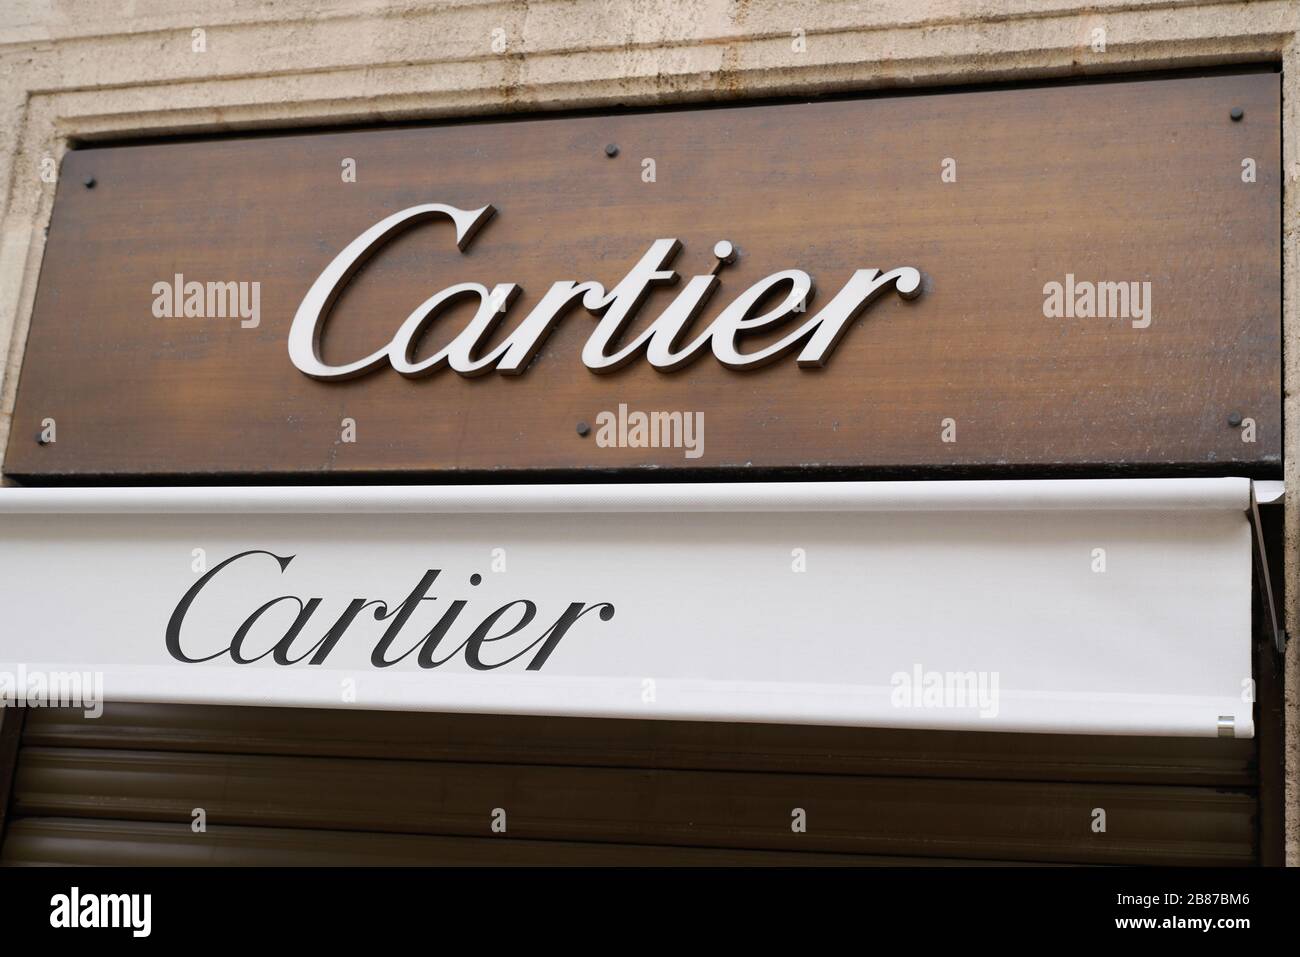 Cartier Jewelry Store Window Banque d'image et photos - Alamy